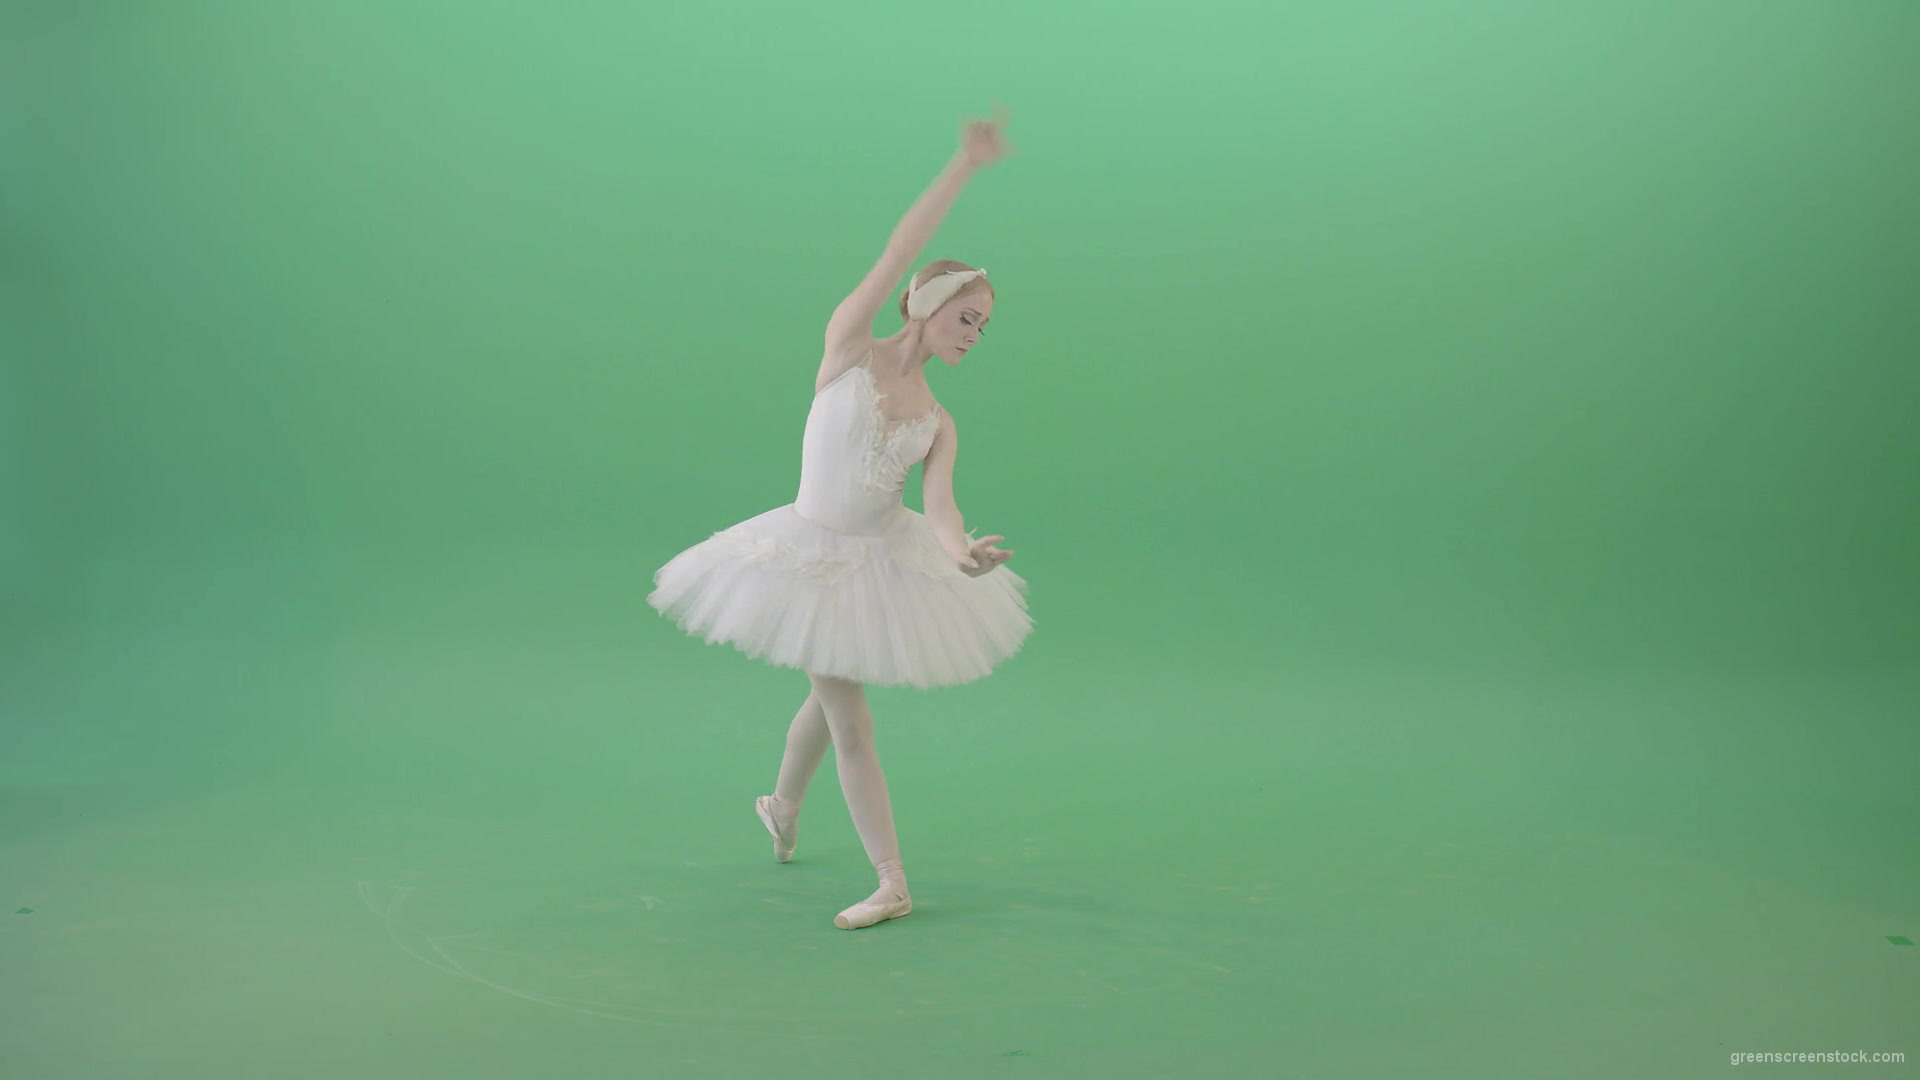 Beautifull-Swan-Lake-Ballerina-waving-hand-wigns-on-green-screen-4K-Video-Footage-1920_005 Green Screen Stock